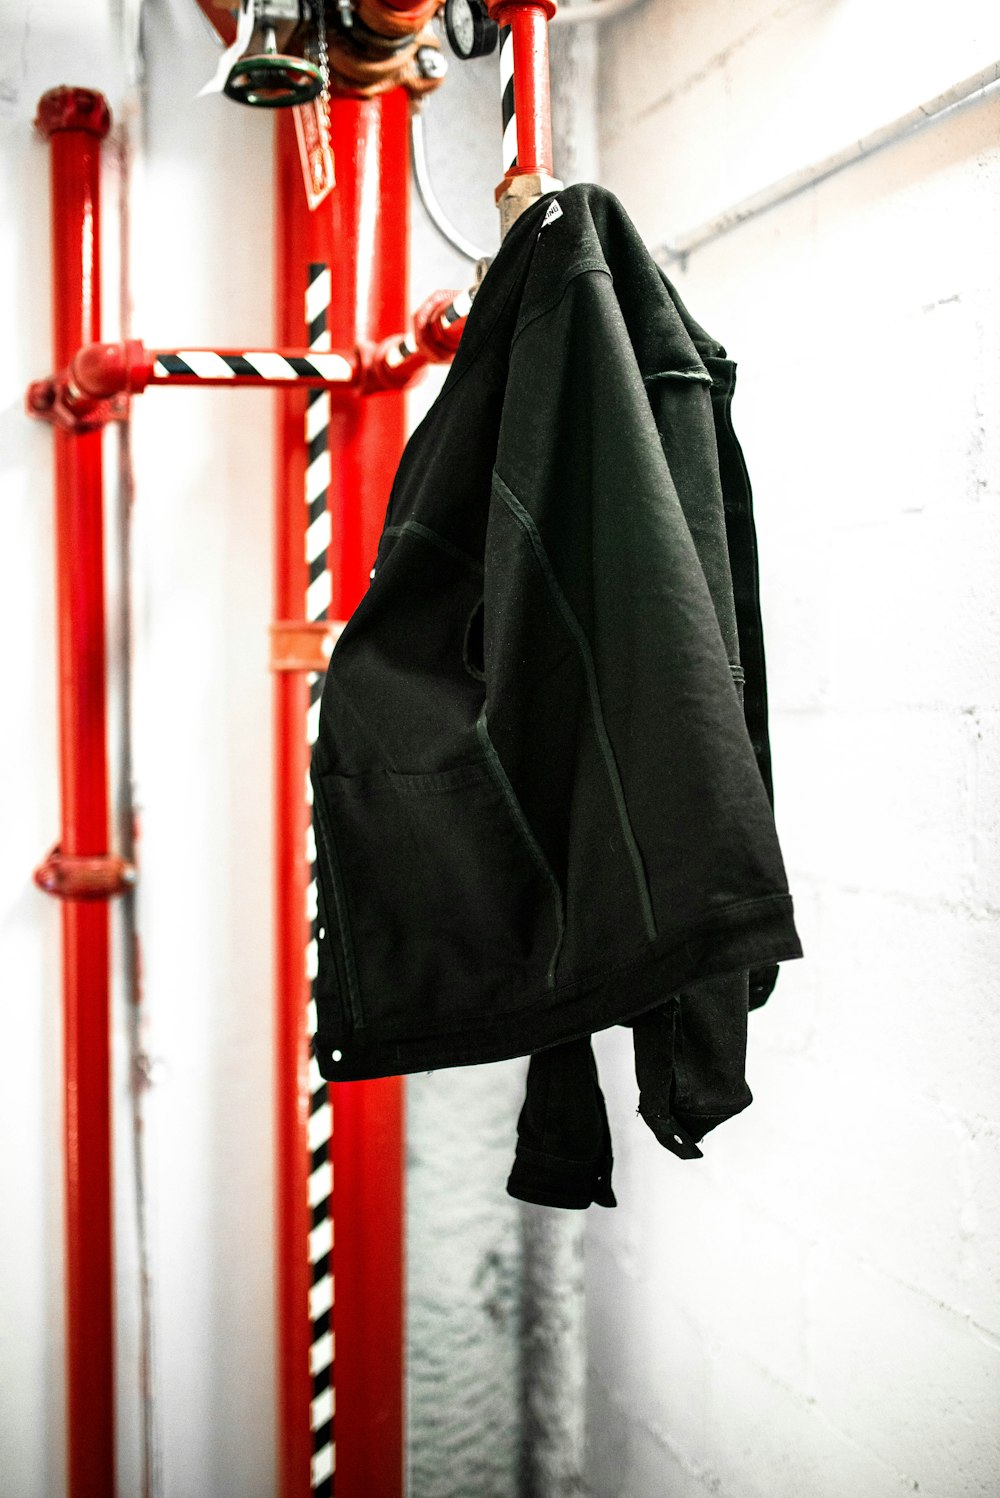 black coat hanging on red coat raack